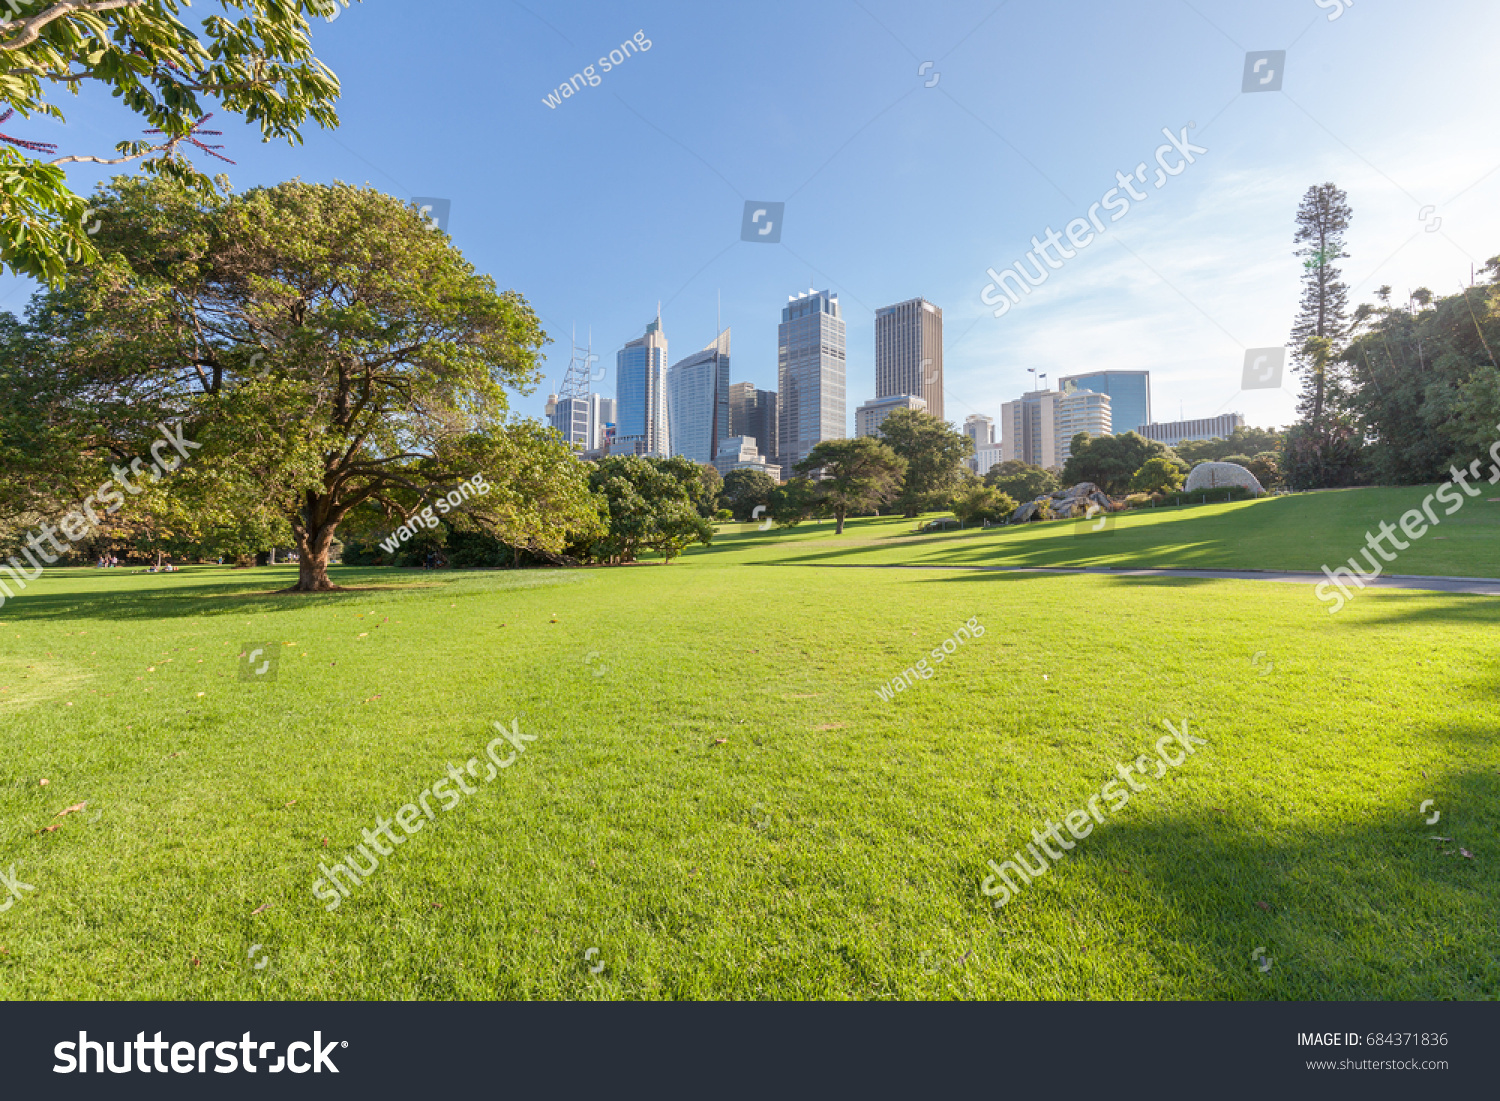 
Sydney city building and park #684371836